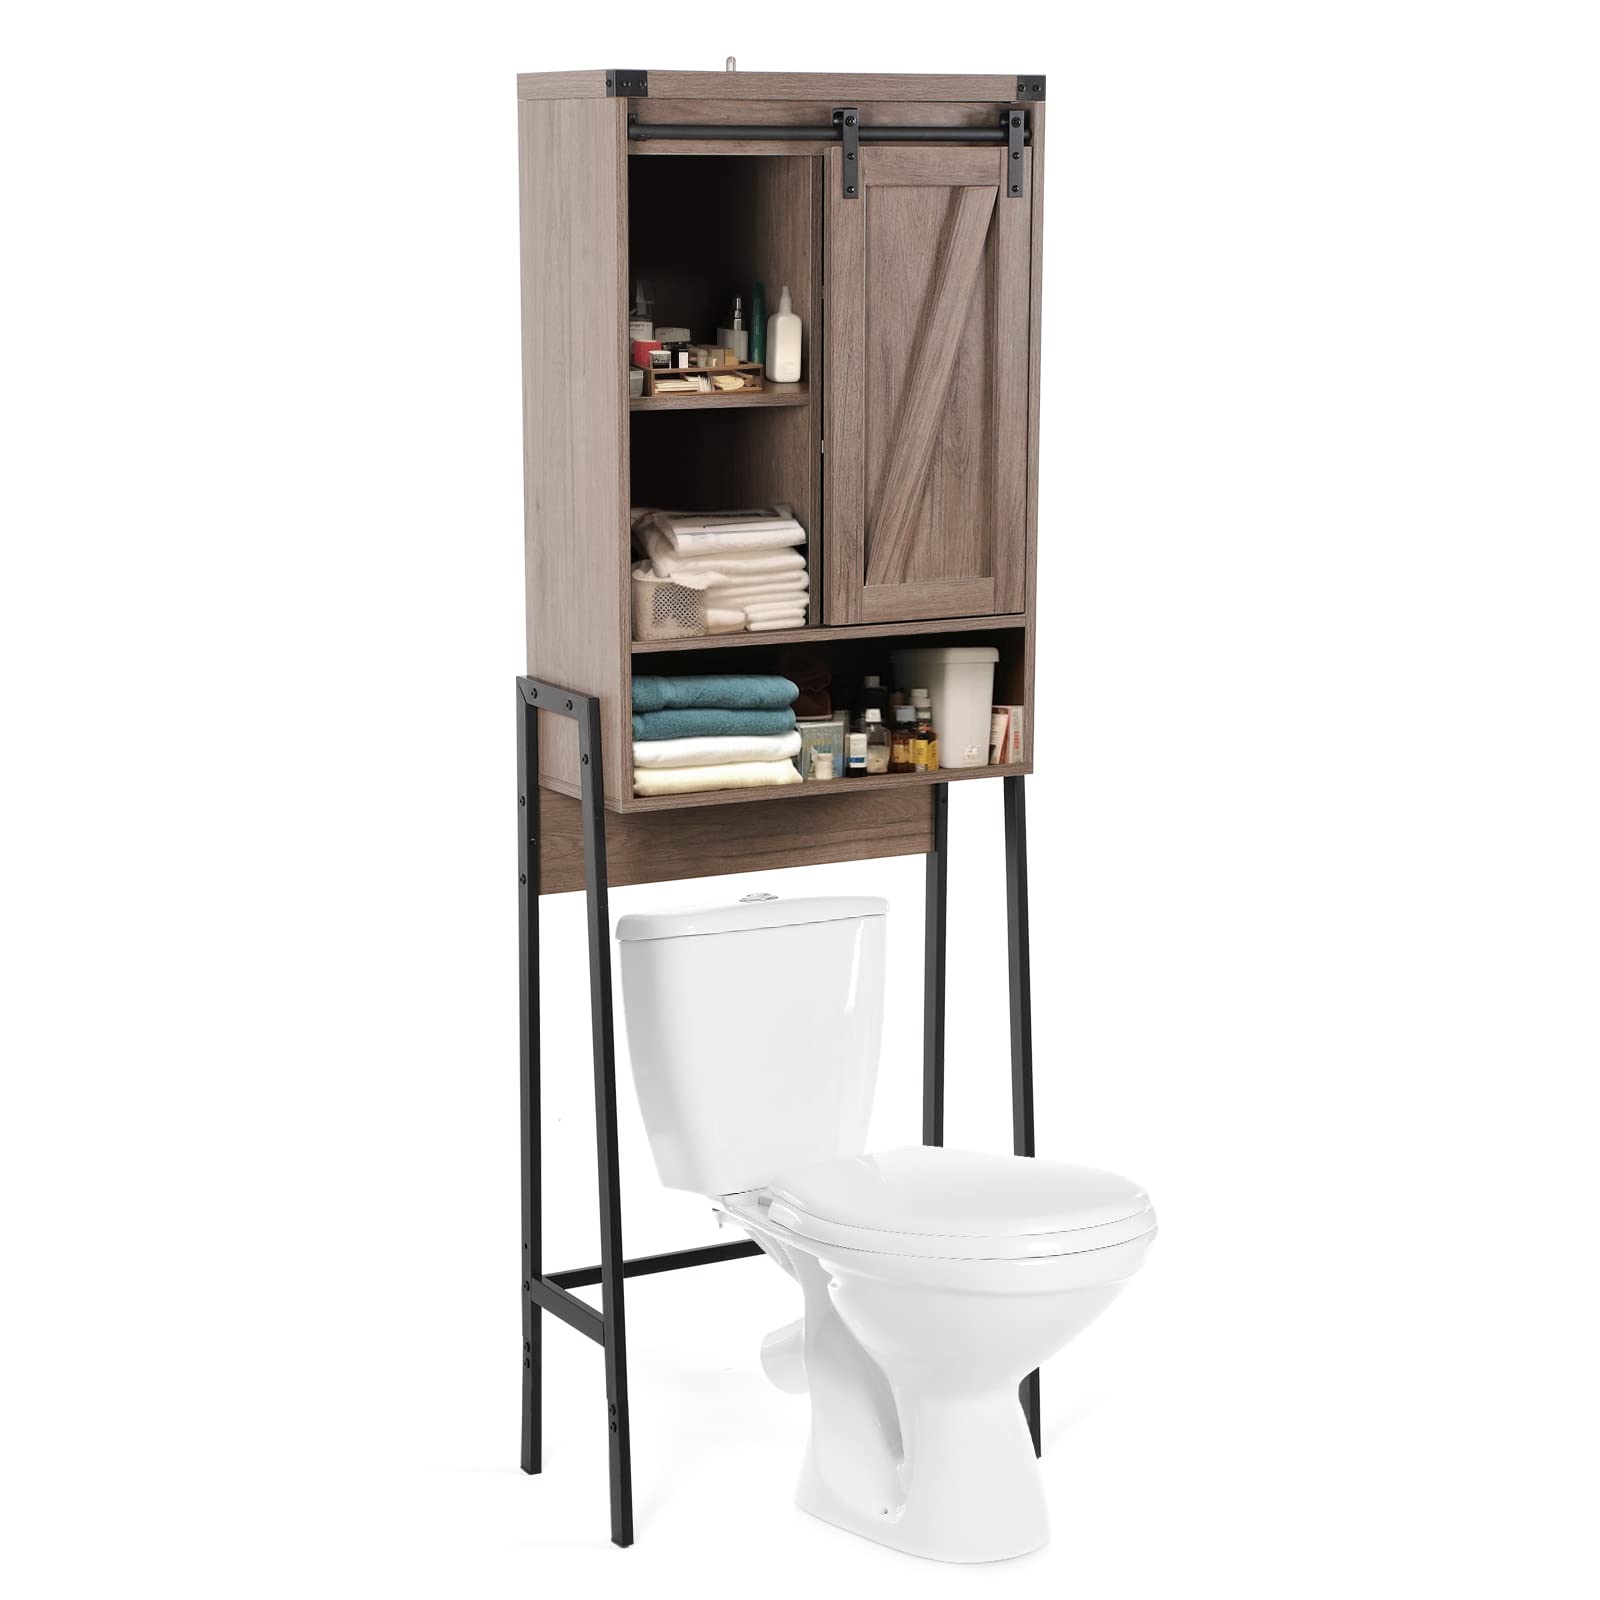 Homajor Over The Toilet Storage Cabinet,Over Toilet Bathroom Organizer,Above Toilet Storage Cabinet,Bathroom Storage Cabinet Over Toilet,with Adjustable Shelf,Sliding Door(Gray)